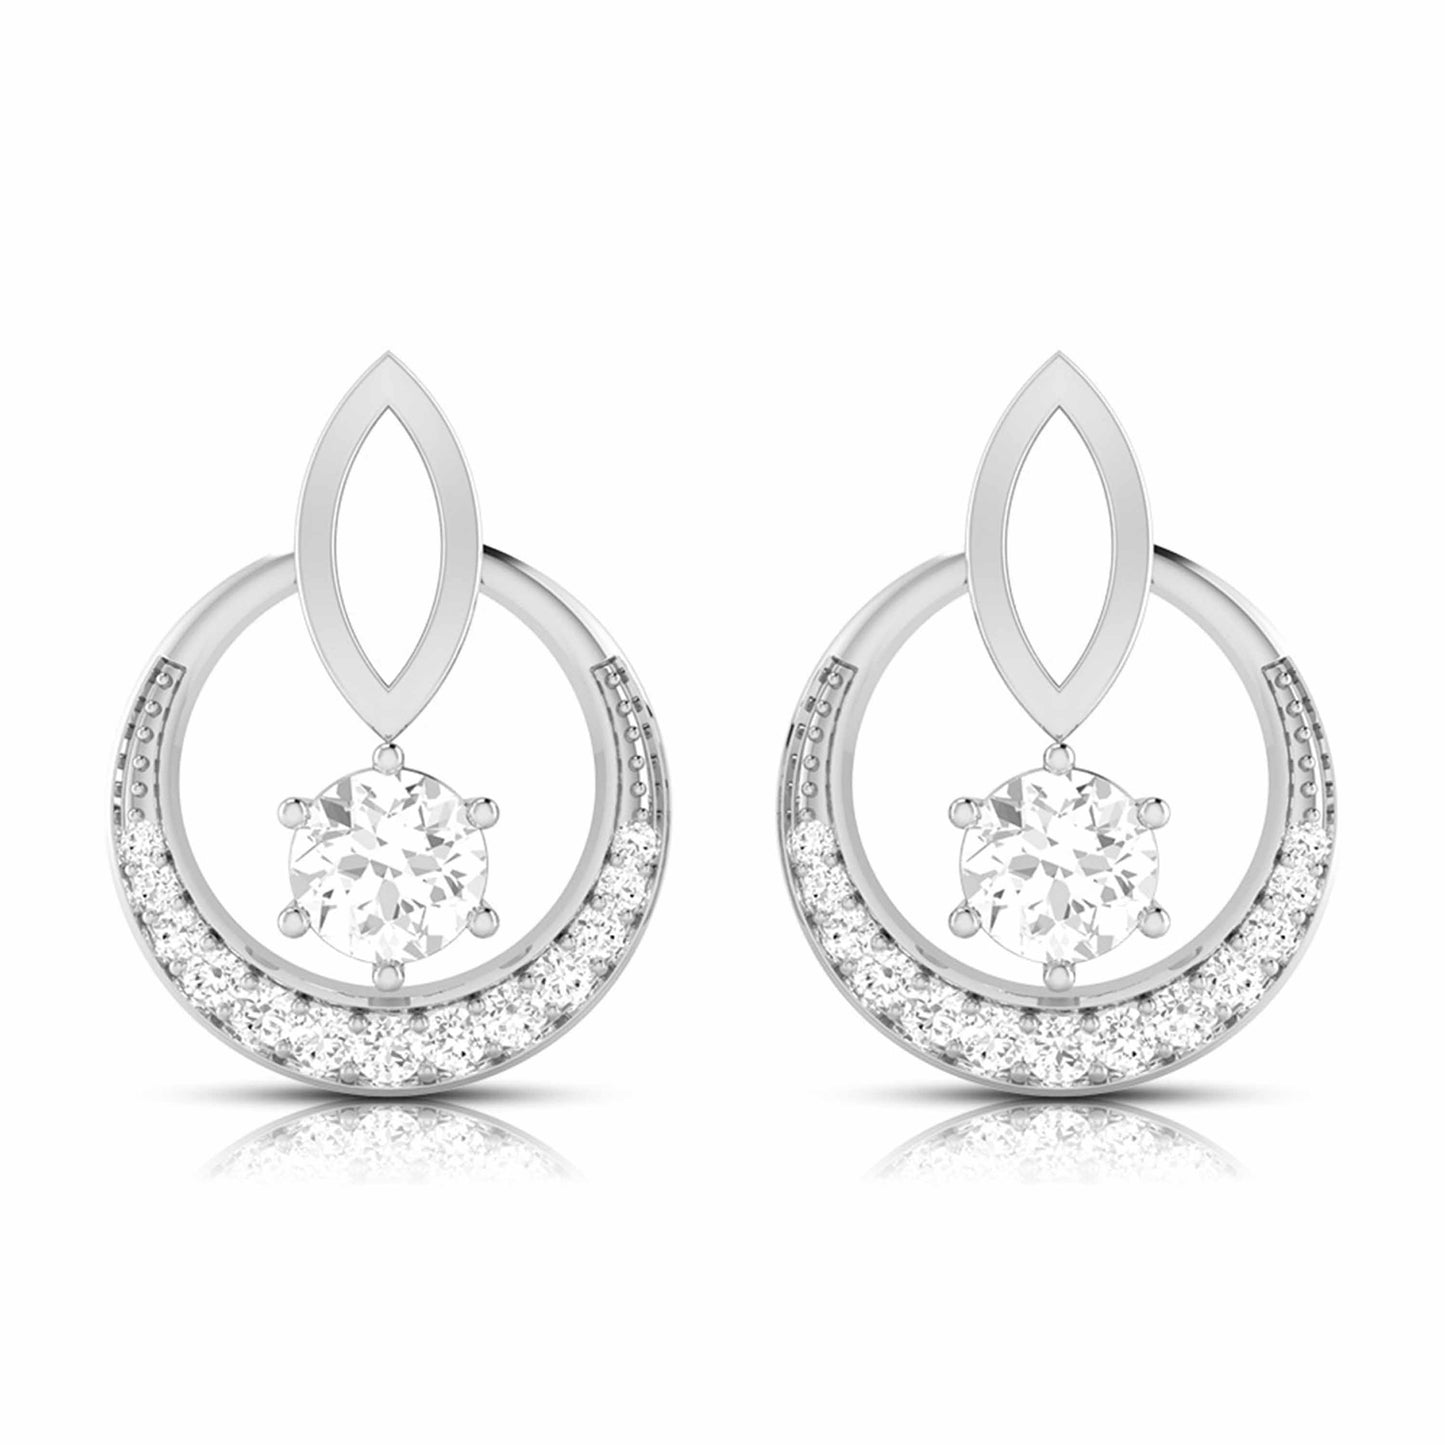 Diamond Earrings Dubai  Free Delivery in UAE  La Marquise